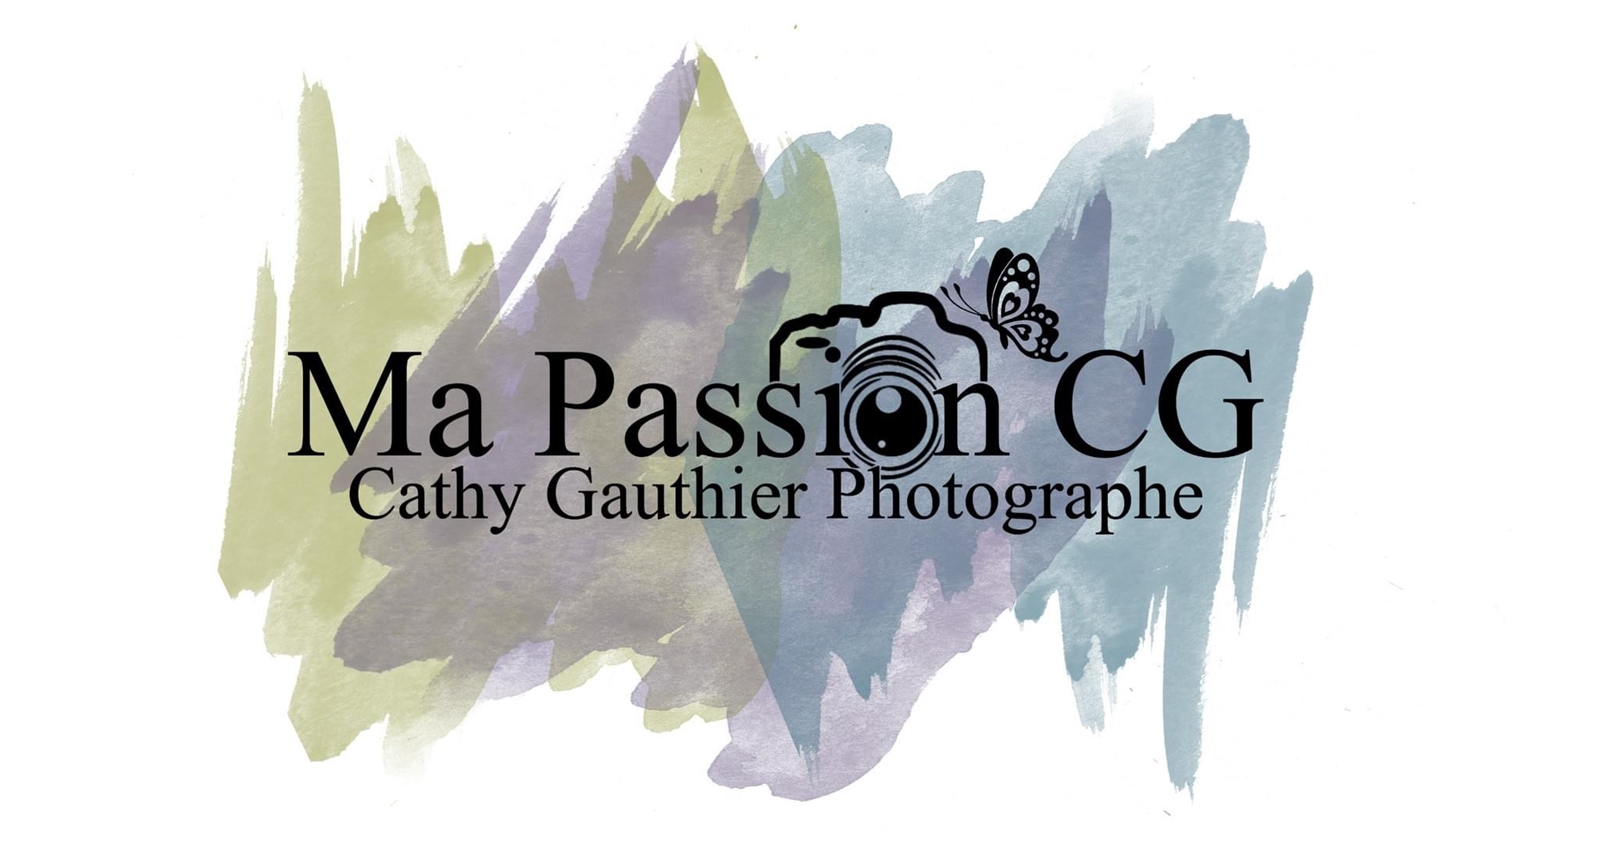 Cathy Gauthier, Ma passion CG Photographe